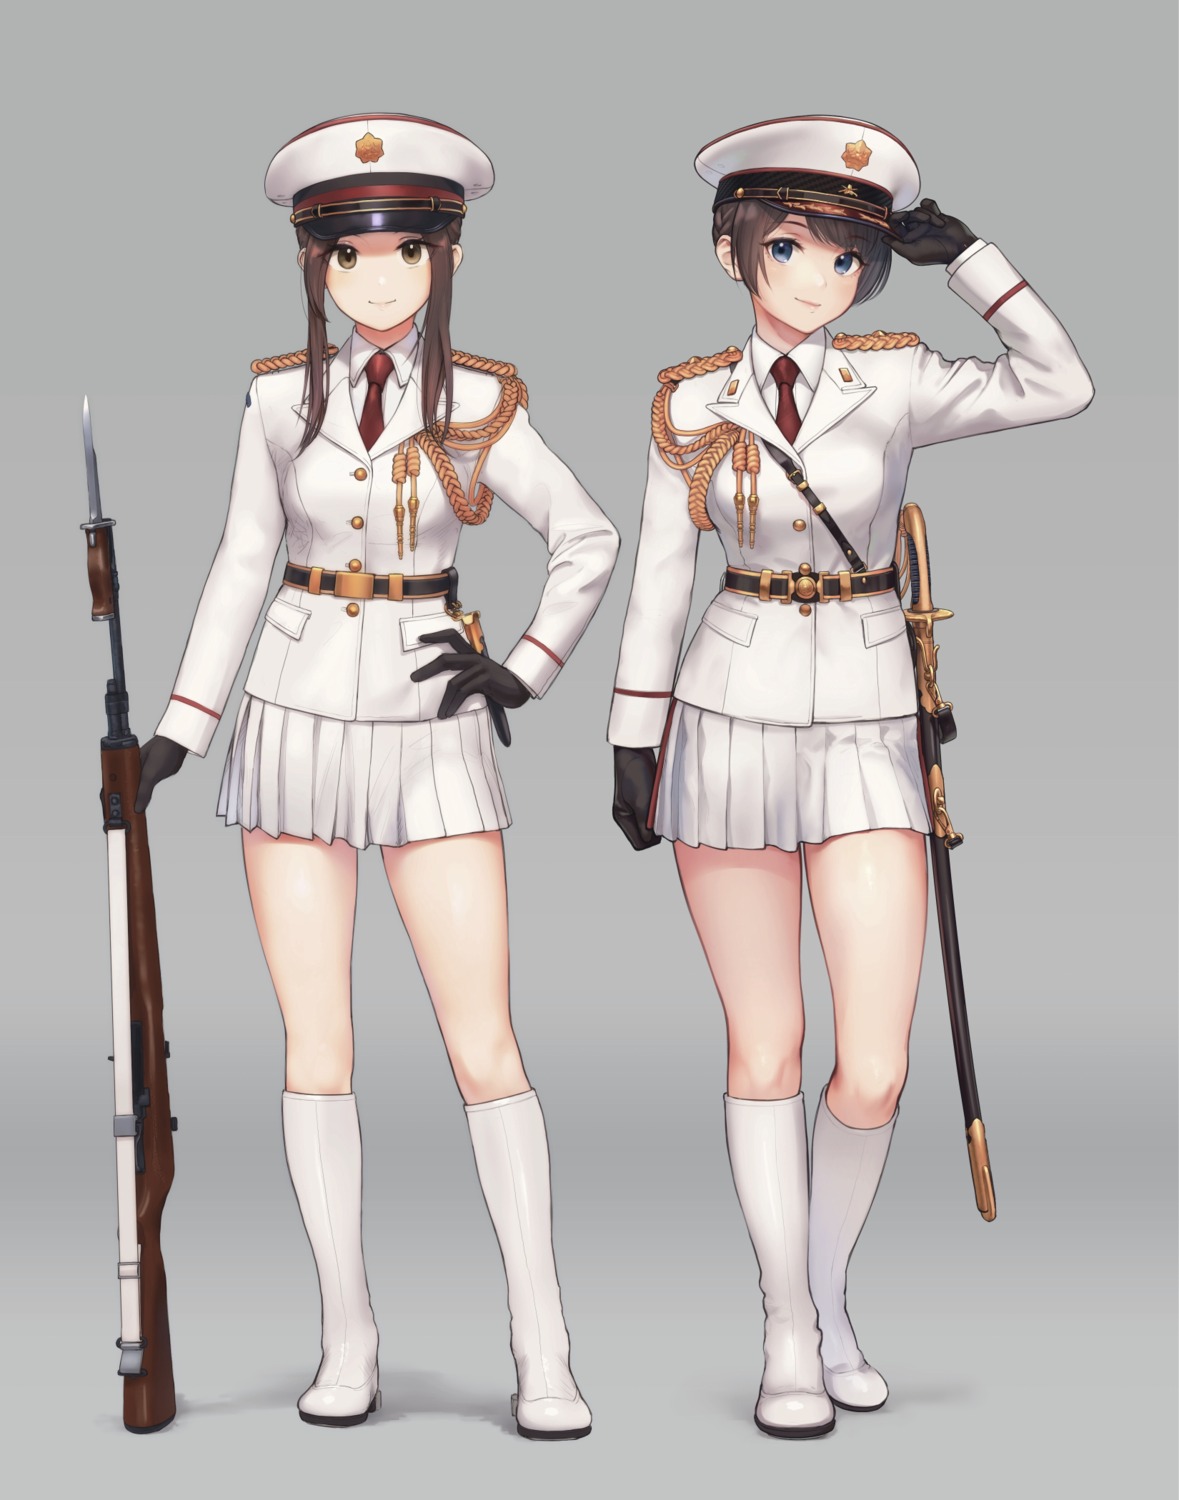 genso gun sword uniform